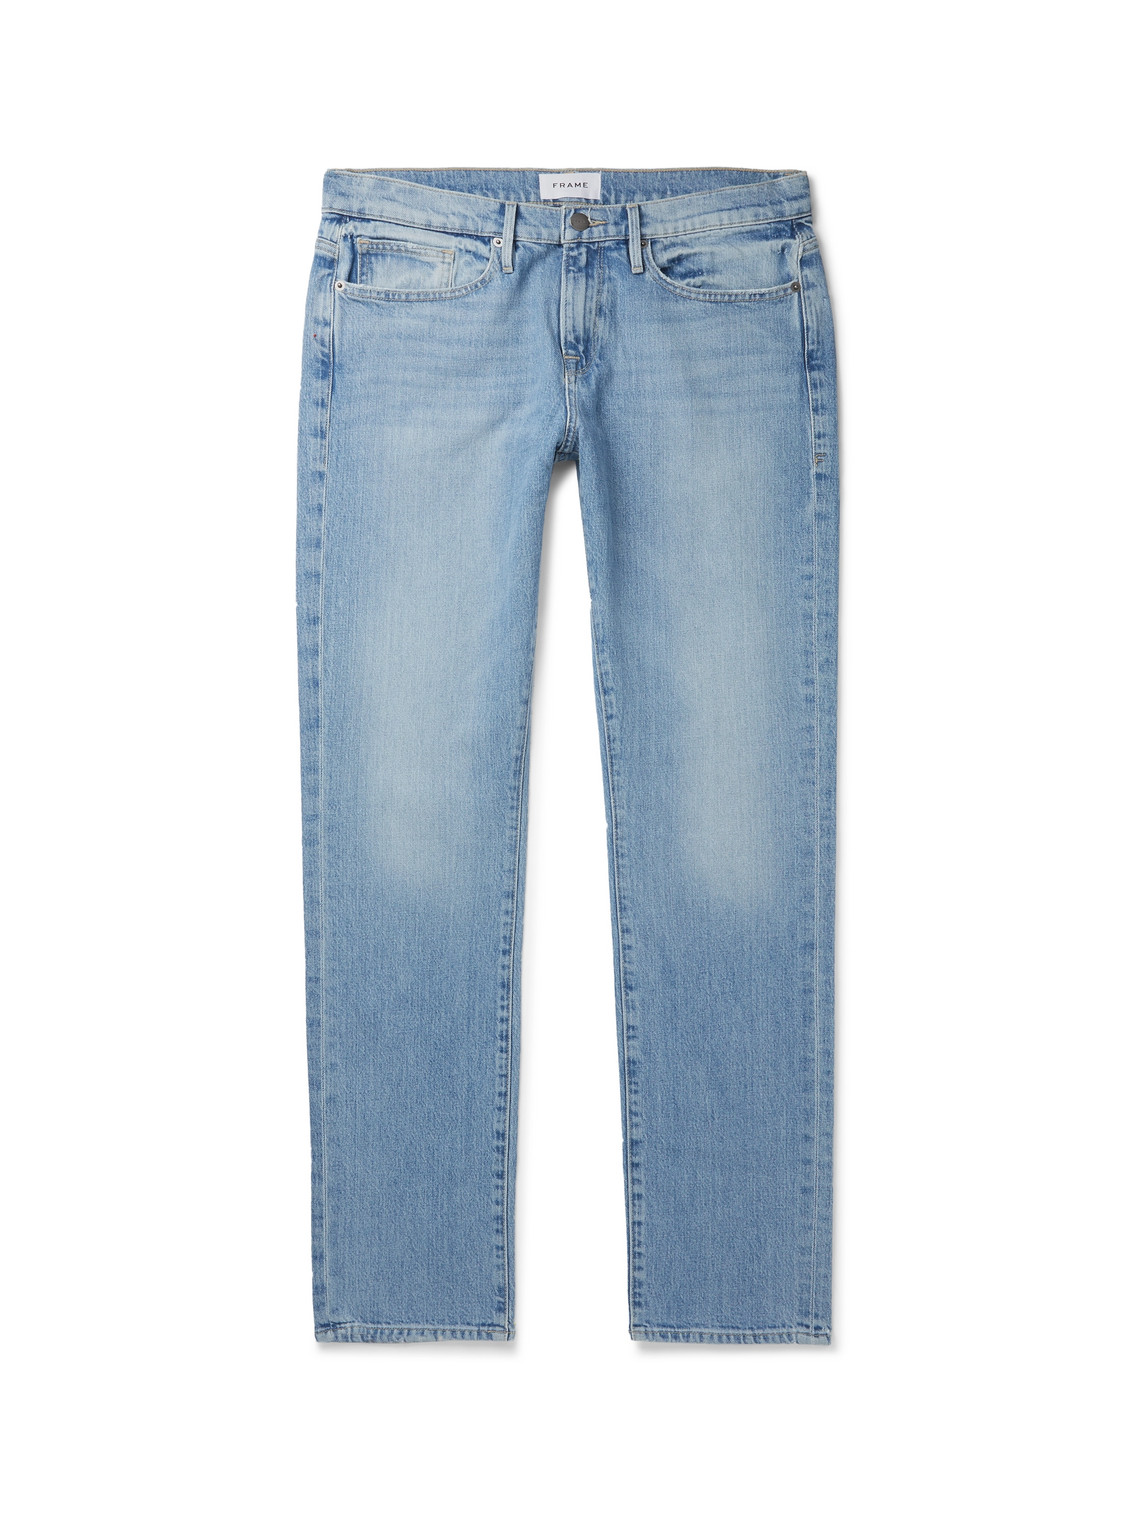 L'Homme Slim-Fit Denim Jeans